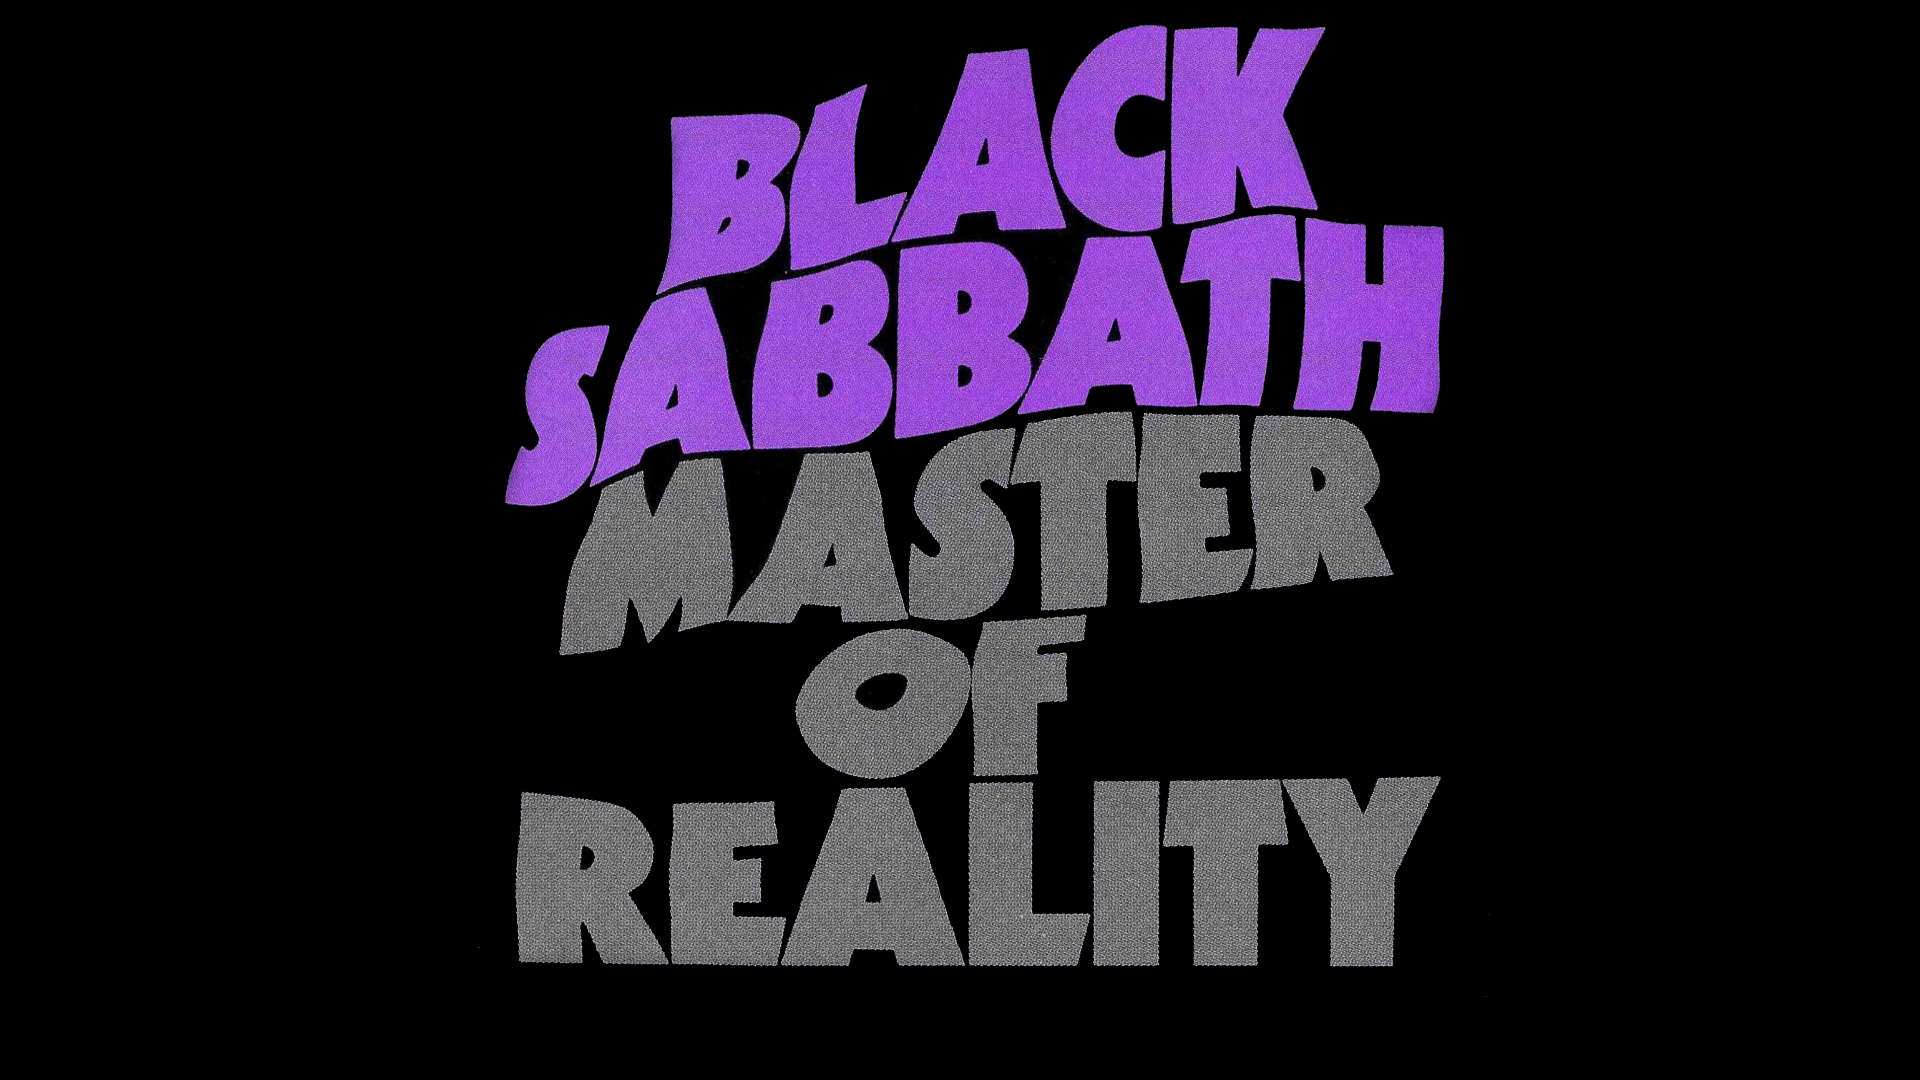 Black Sabbath - desktop wallpaper